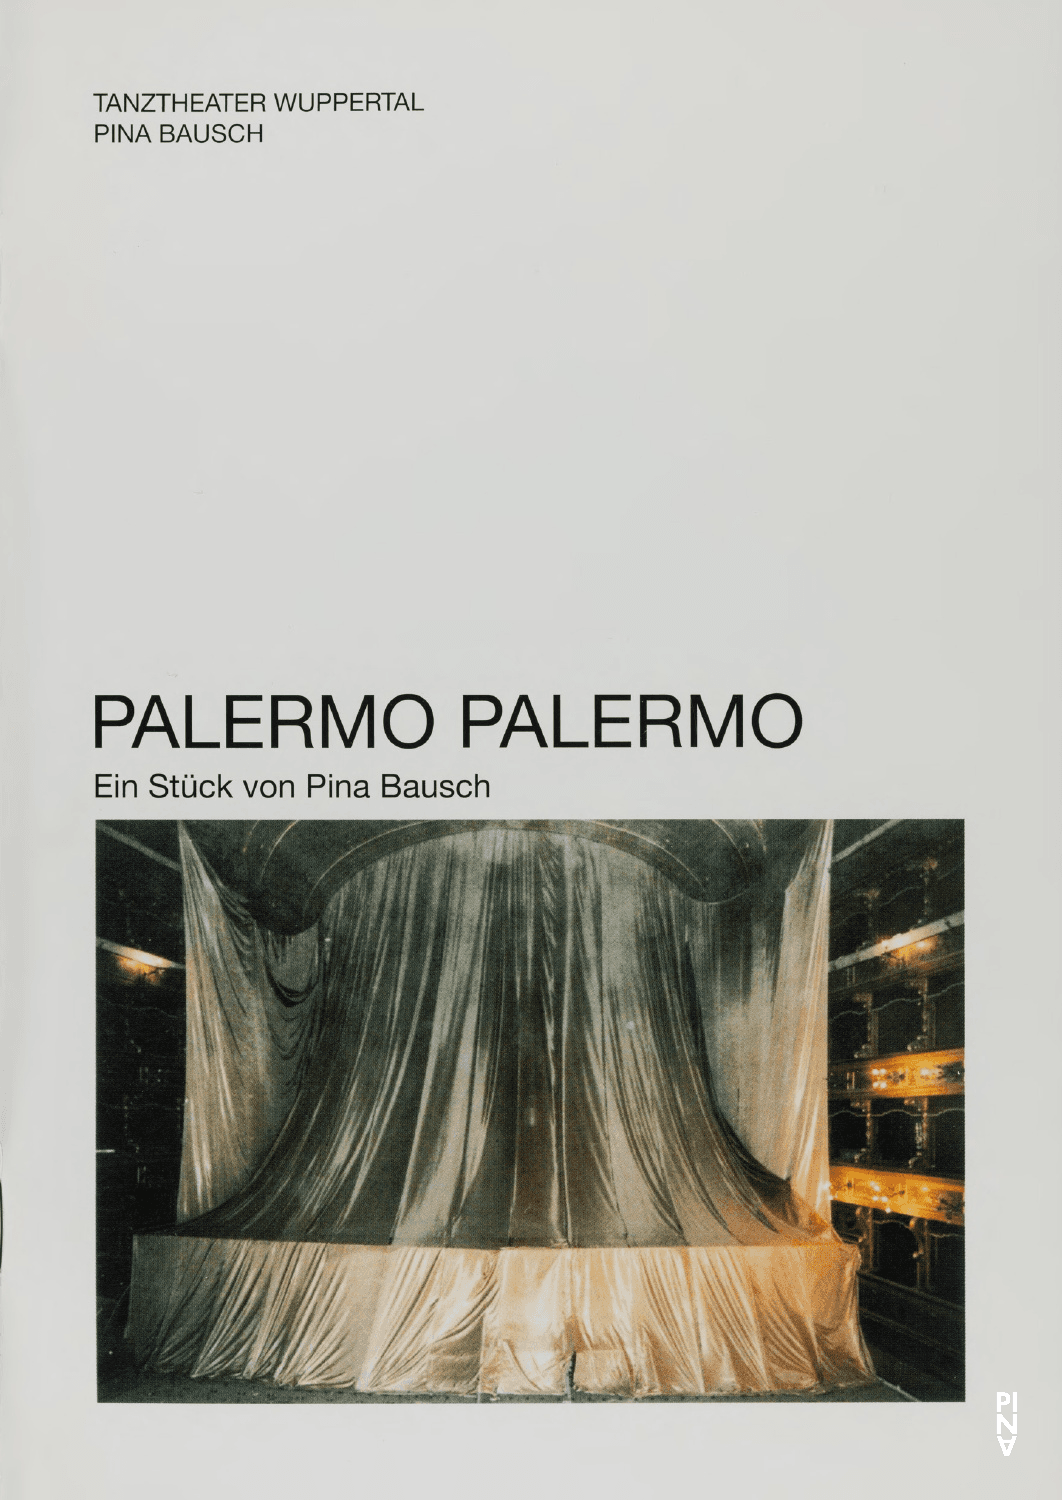 Programme pour « Palermo Palermo » de Pina Bausch avec Tanztheater Wuppertal à Wuppertal, 12 jan. 2011 – 16 jan. 2011